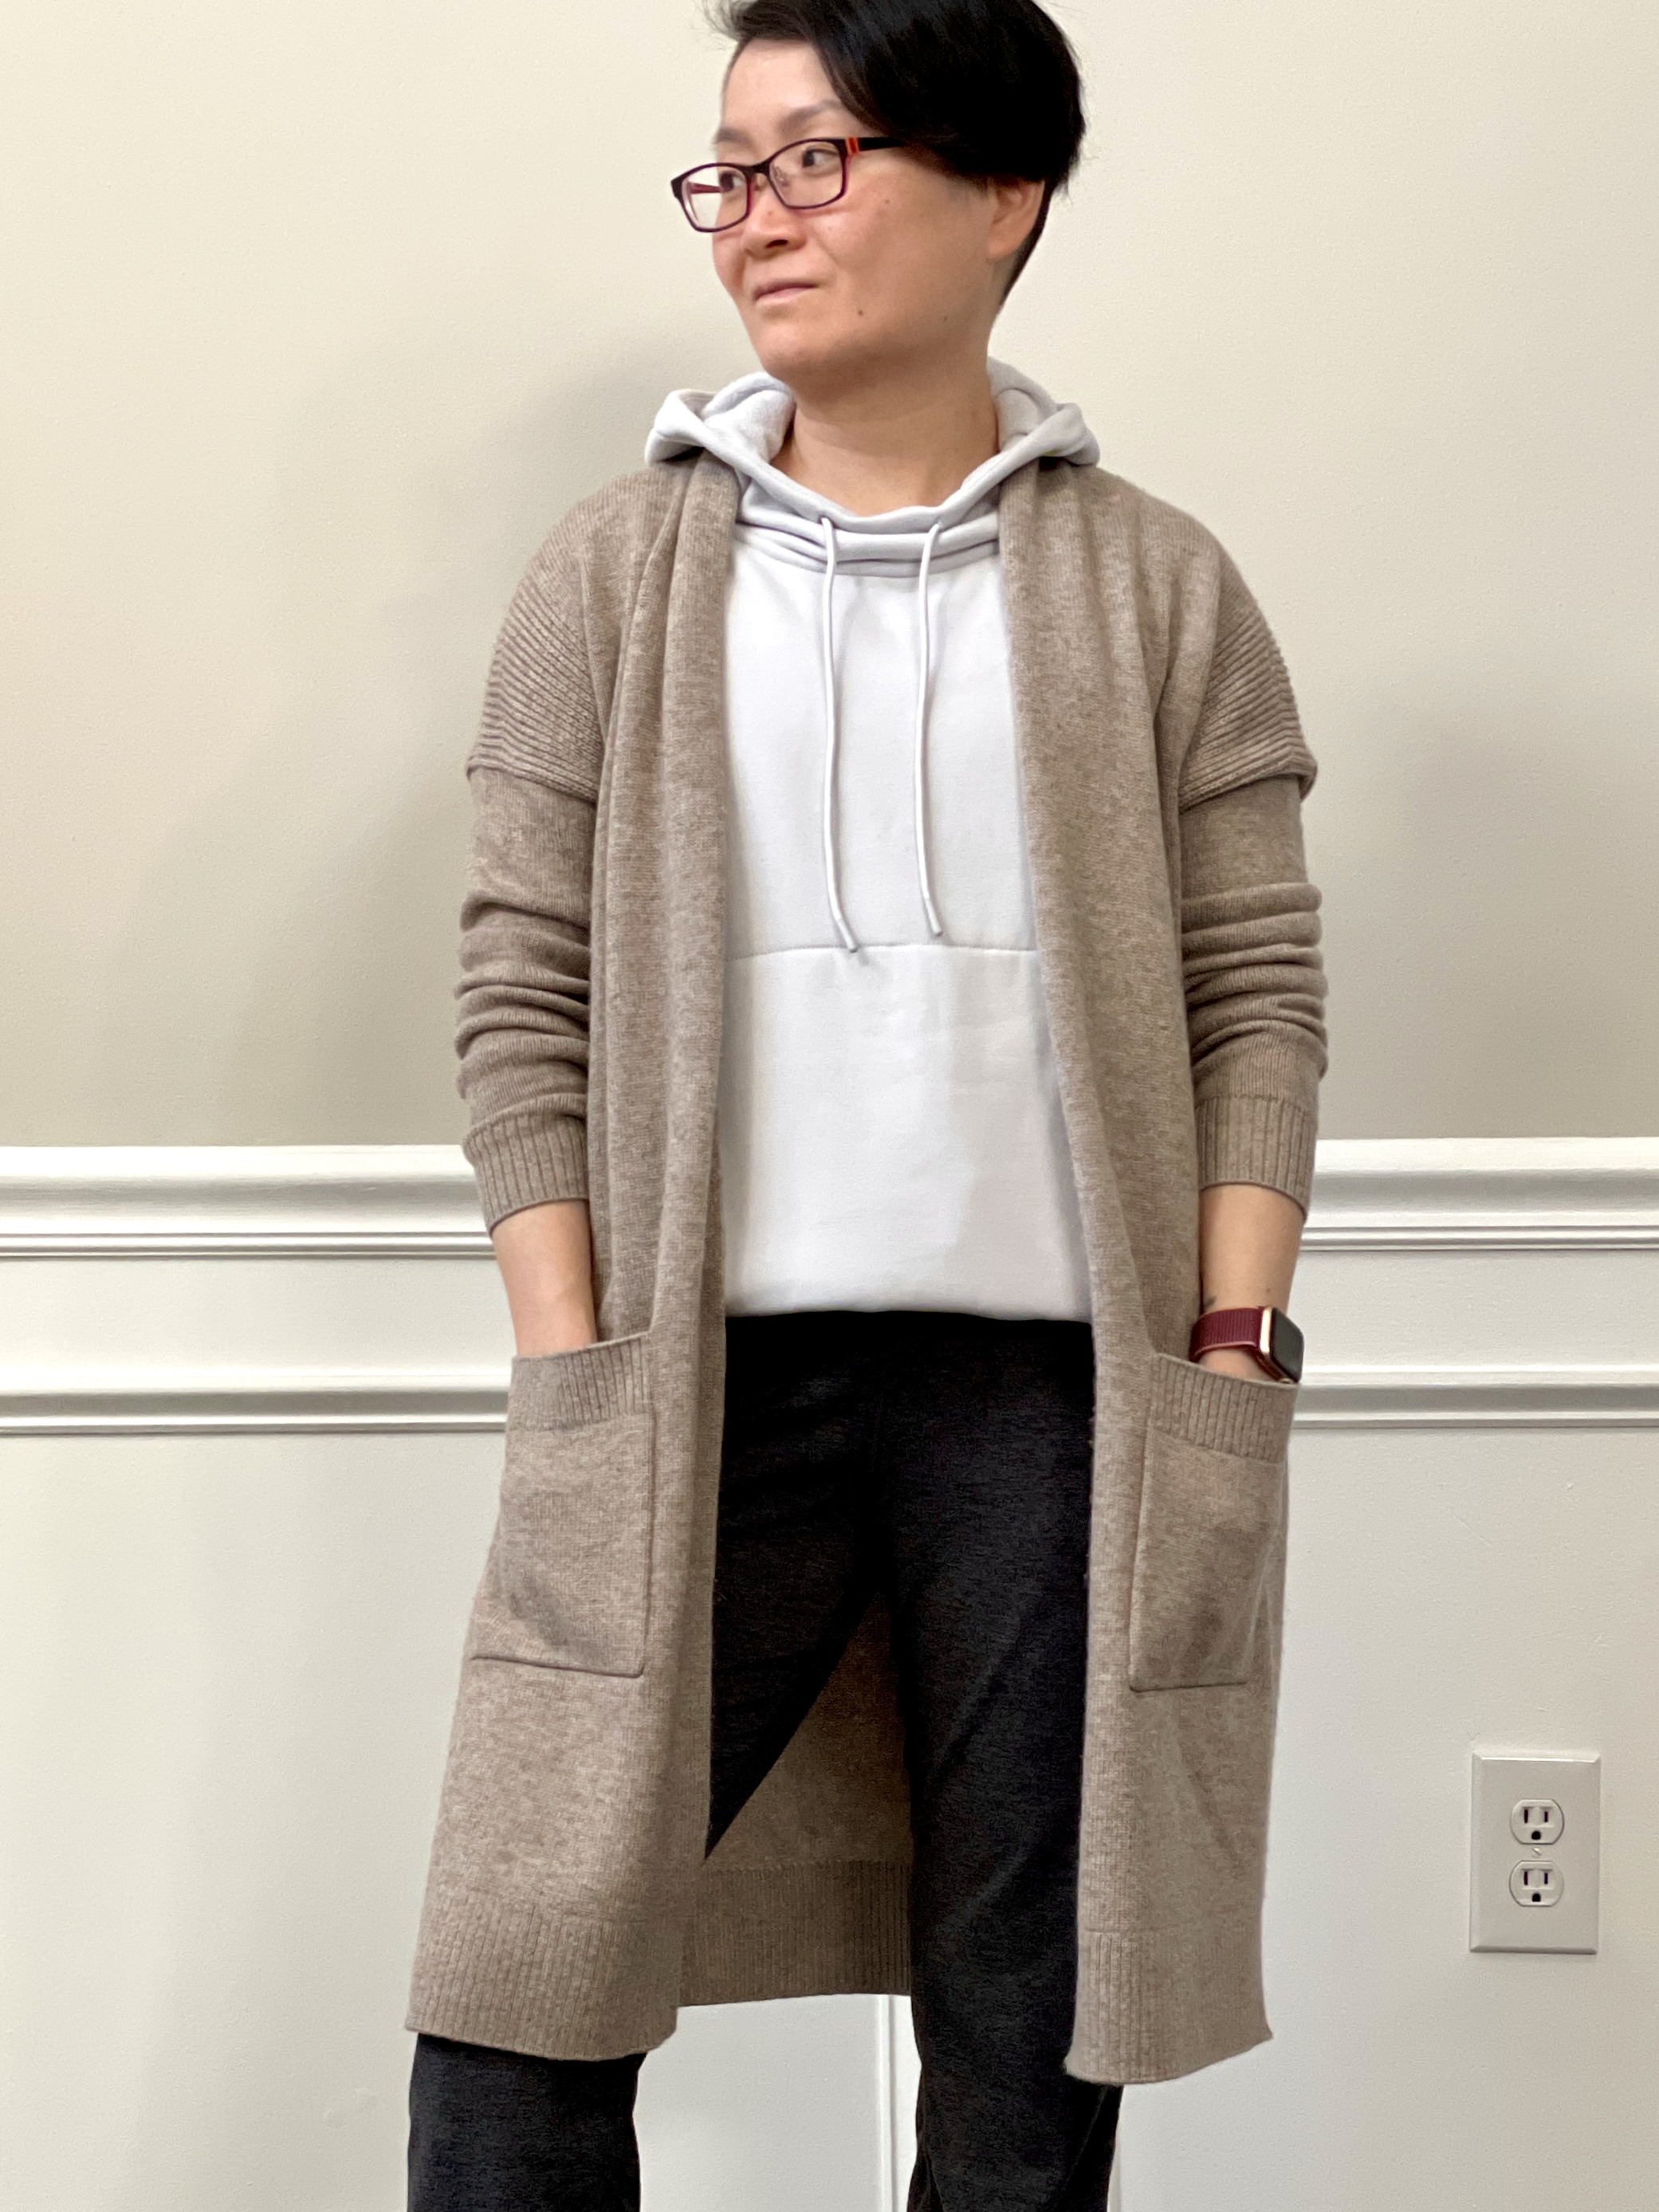 2022 New Children Zip Hoodies 3D Printed Casual Jacket Fashion Streetwear  Sweatshirt Boy Girl Kids Hooded Cardigan LV Tops Coat